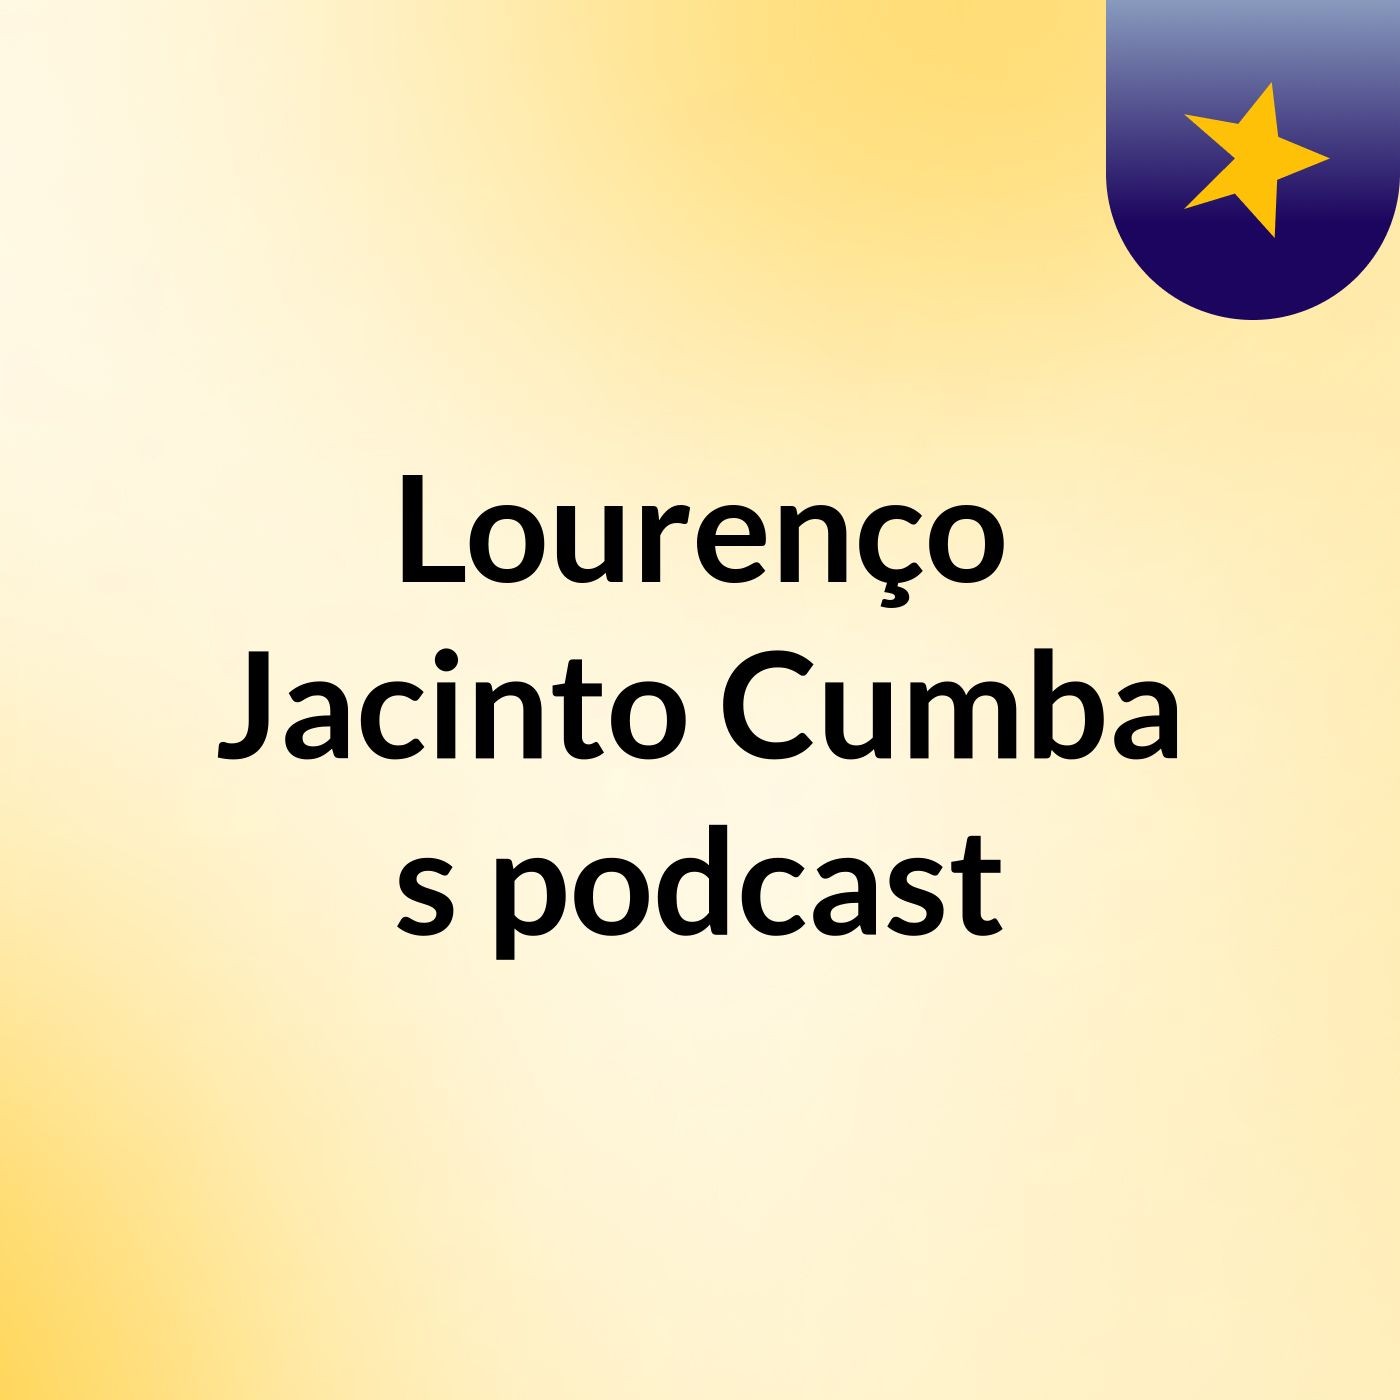 Lourenço Jacinto Cumba's podcast